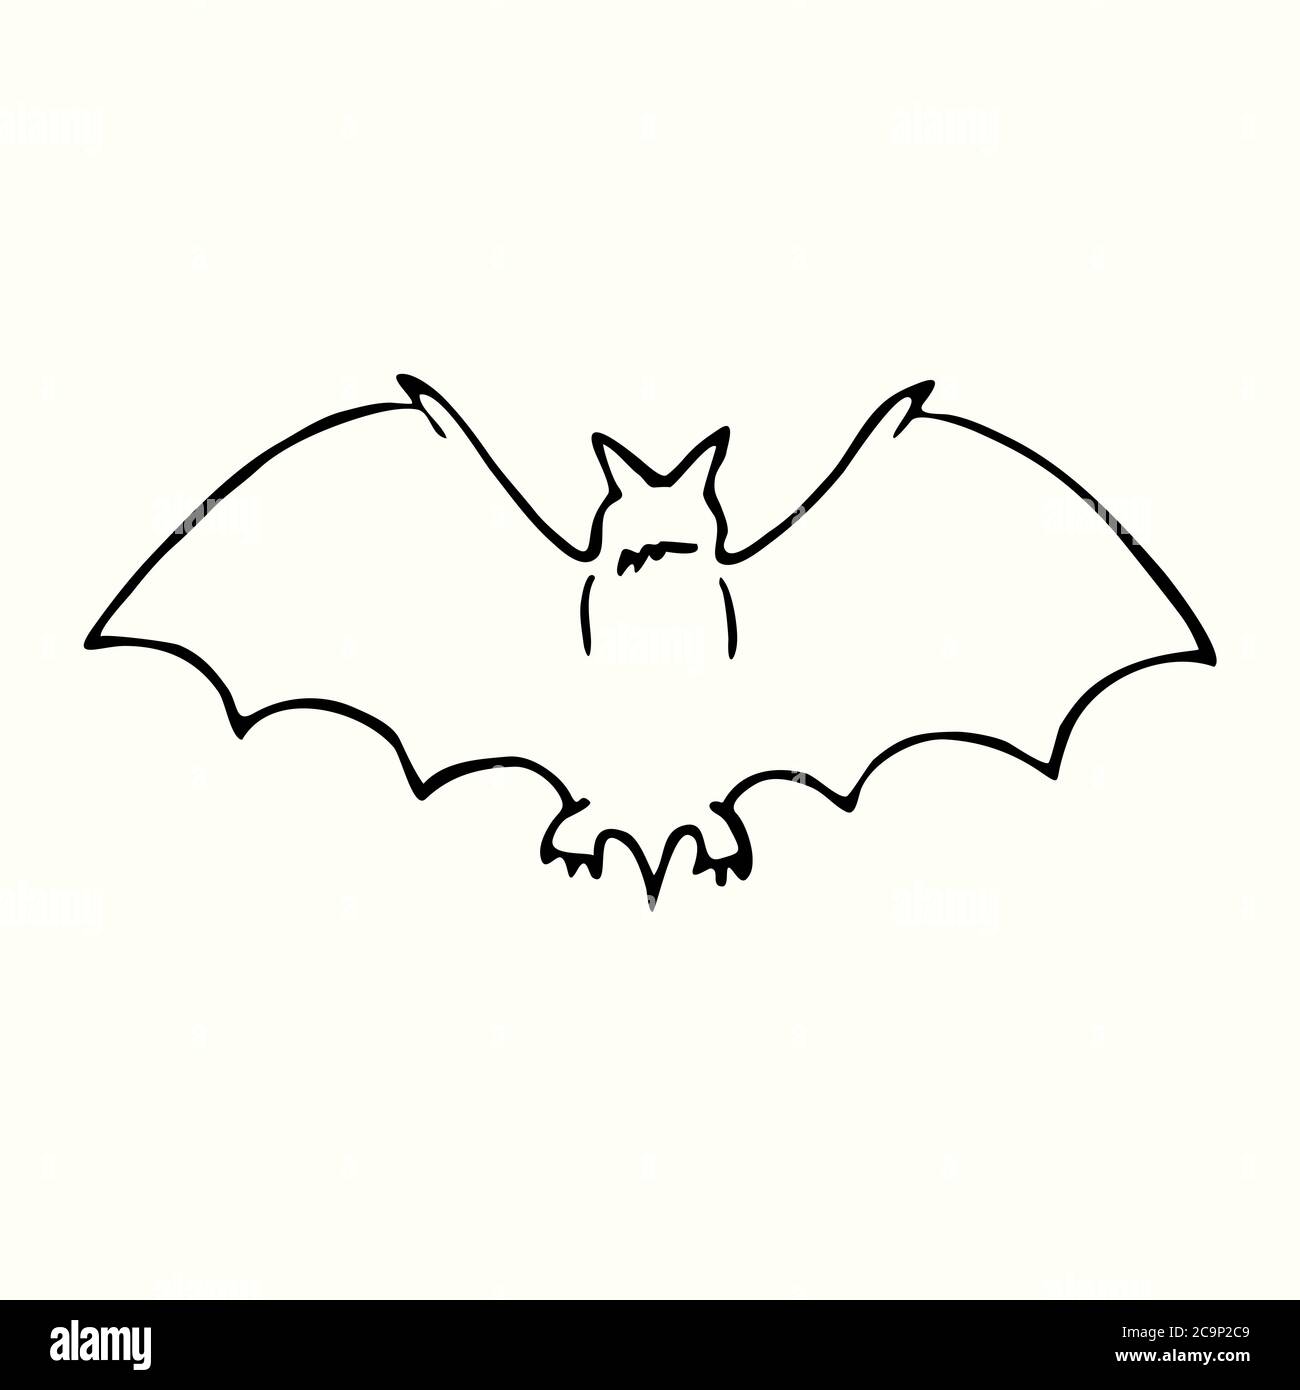 Bat outline, hand drawn doodle, drawing, sketch illustration, design  element Stock Photo - Alamy